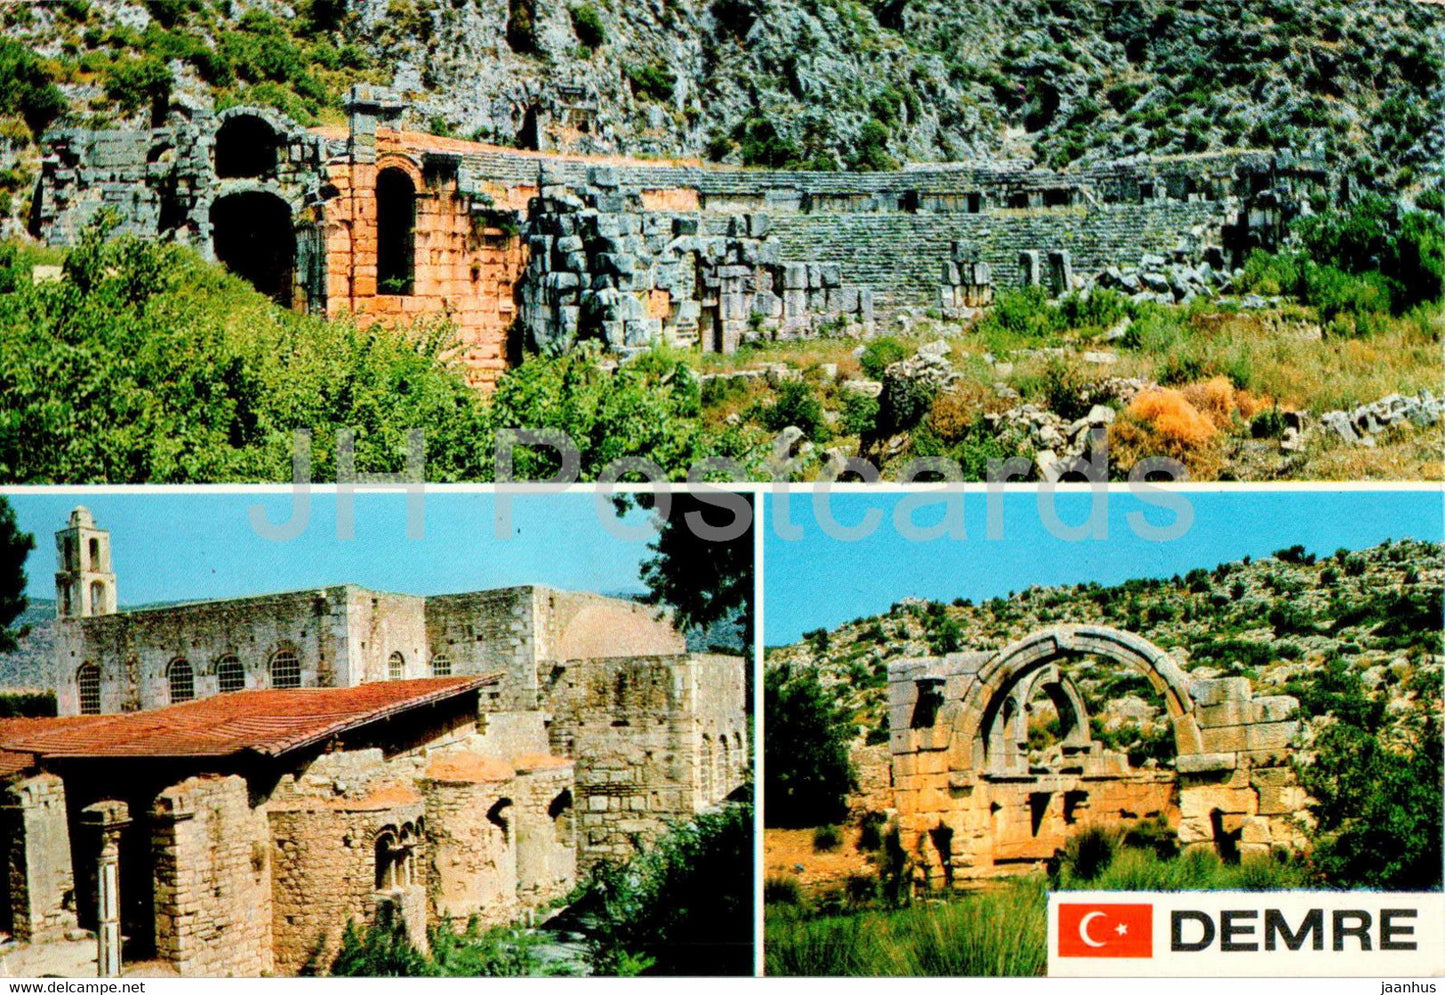 Demre - Antalya - Tarihi harabelerden uc gorunum - ancient world - multiview - 1987 - Turkey - used - JH Postcards